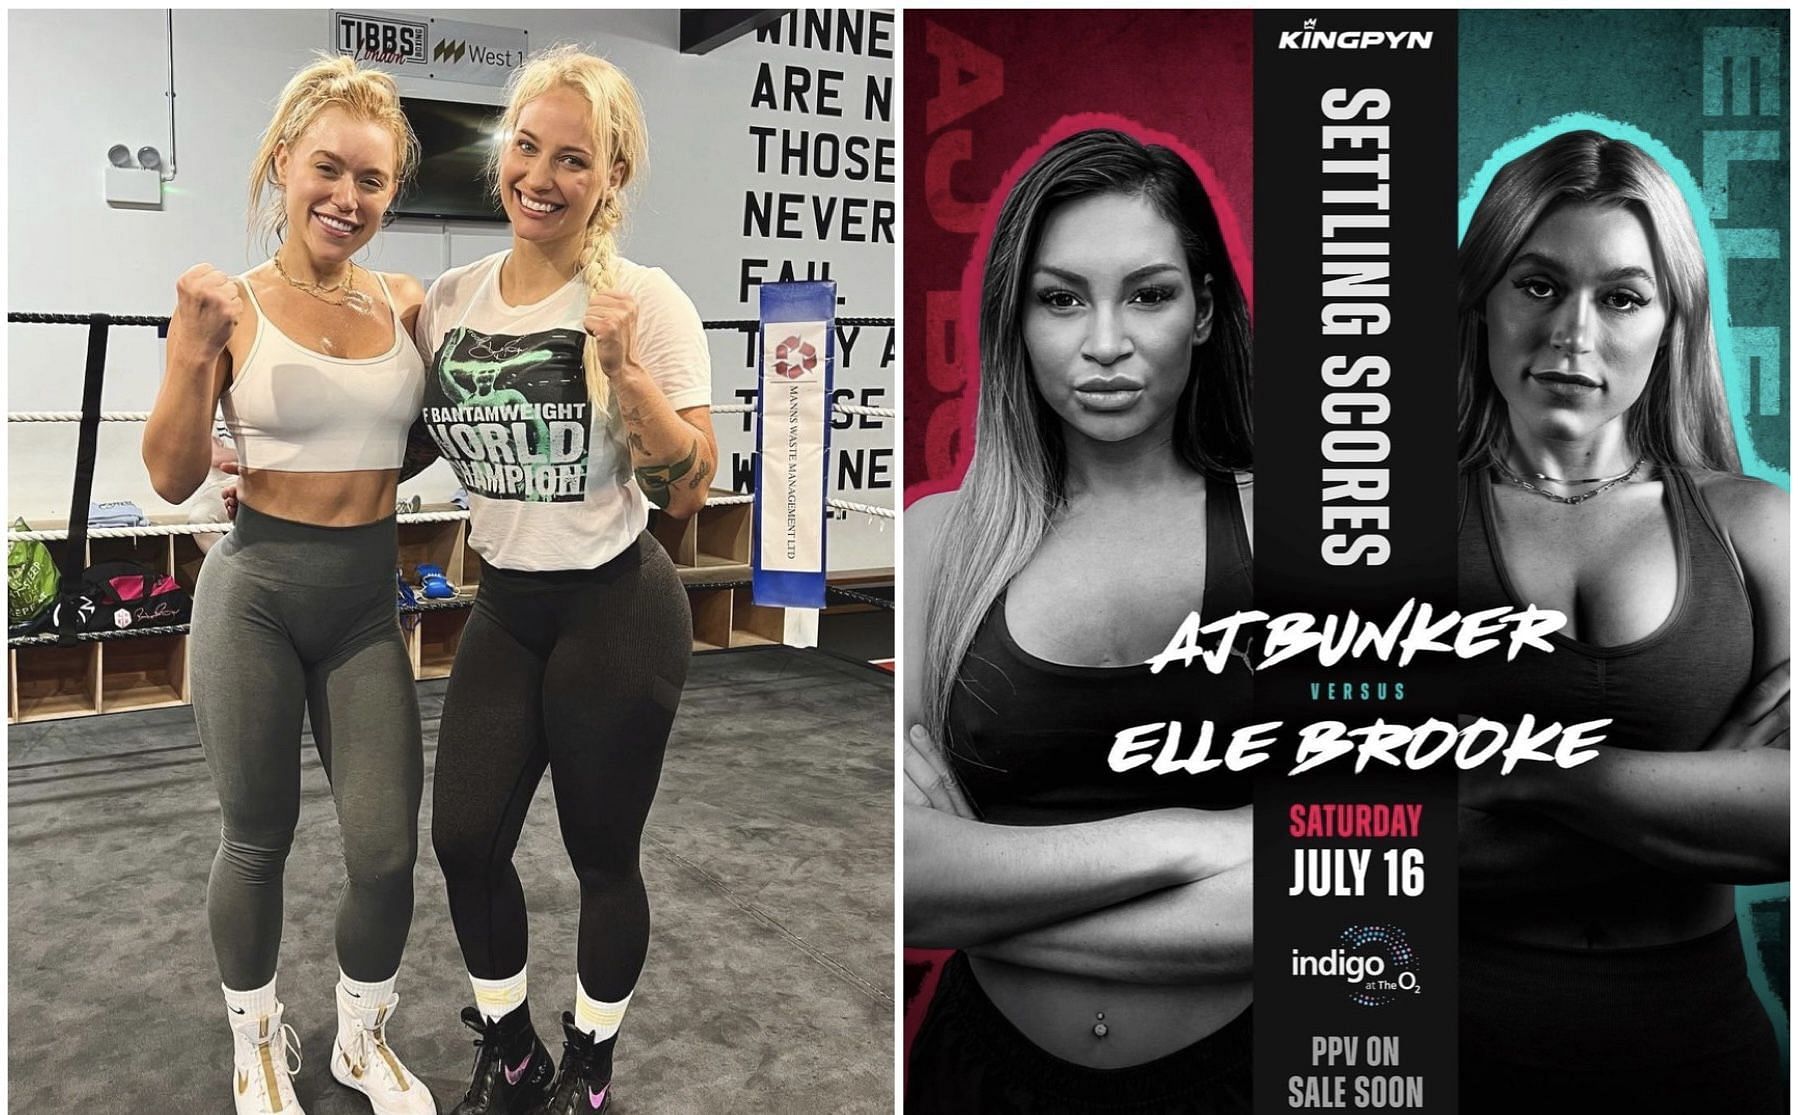 Elle Brooke (left) and Ebanie Bridges (right), AJ Bunker (left) and Elle Brooke (right) - Images via @ebanie_bridges and @kingpynboxing on Instagram